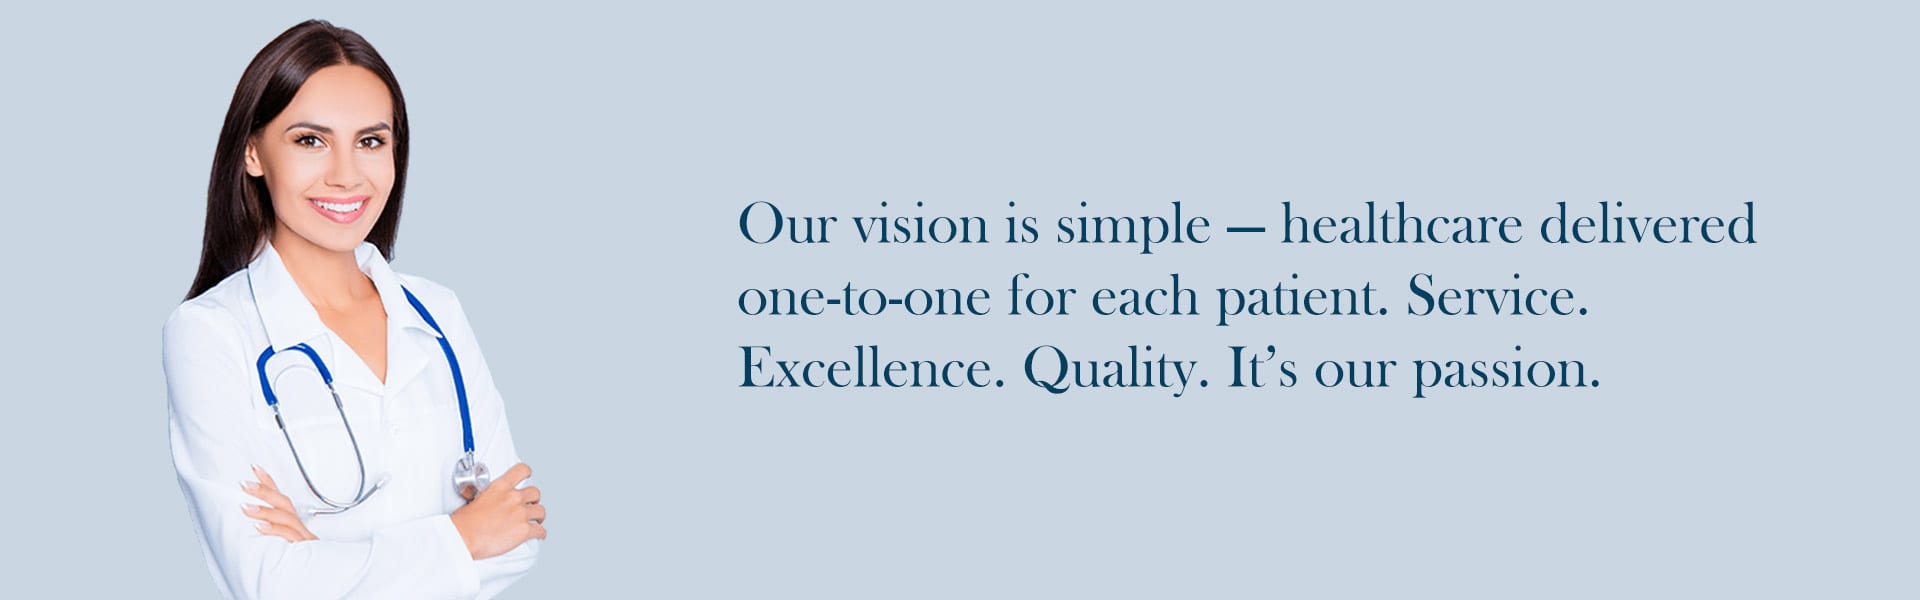 Pinnacle Hospital - Our Vision